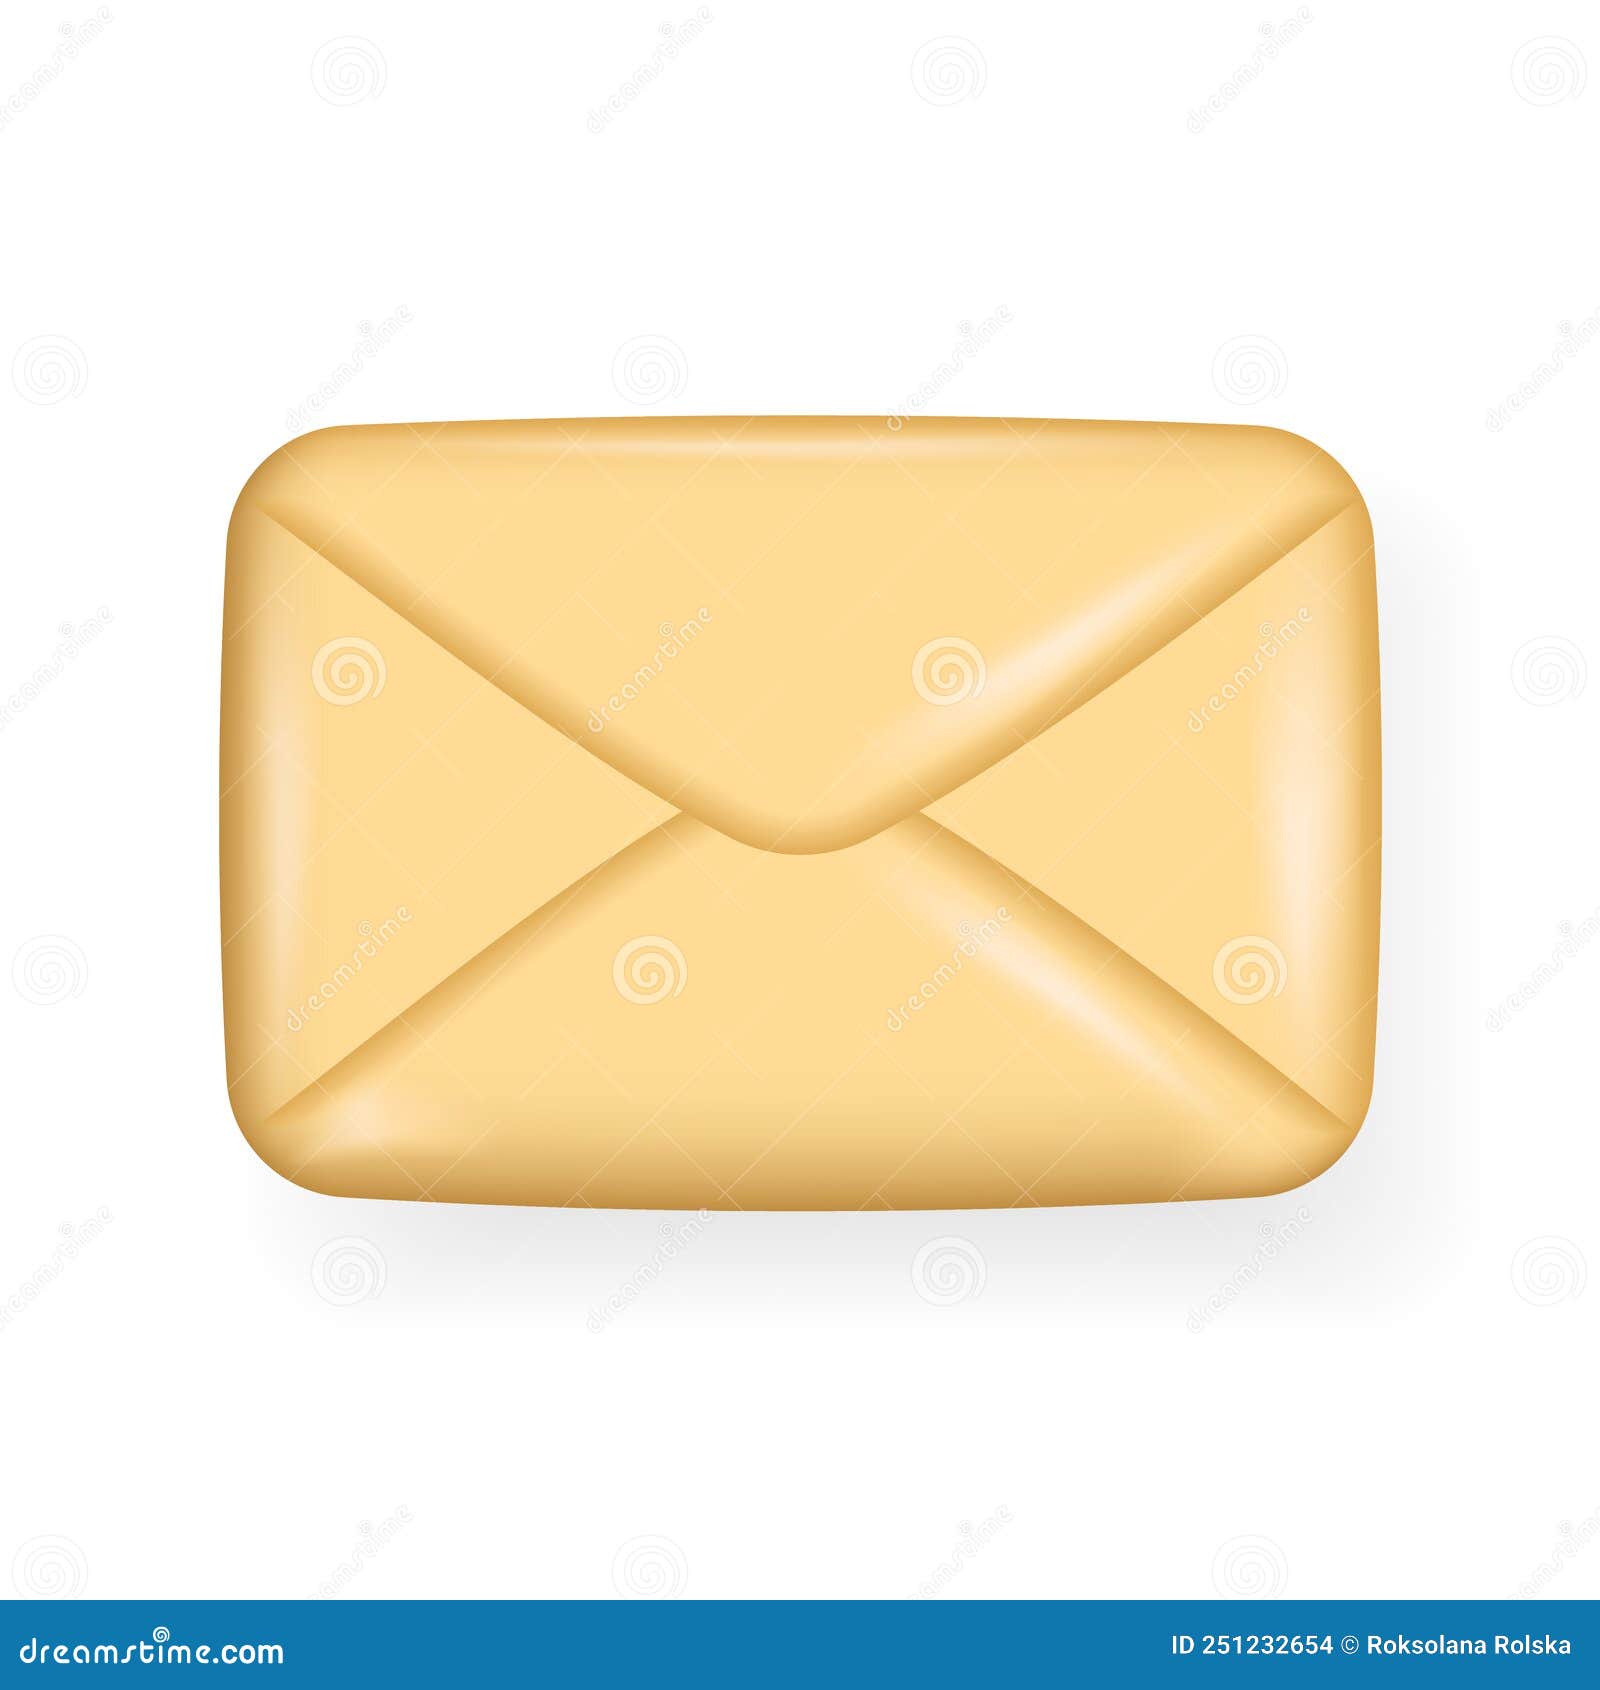 Internet Mail Email Envelope Spam Realistic 3d Emoji Symbol Abstract Cartoon Design 